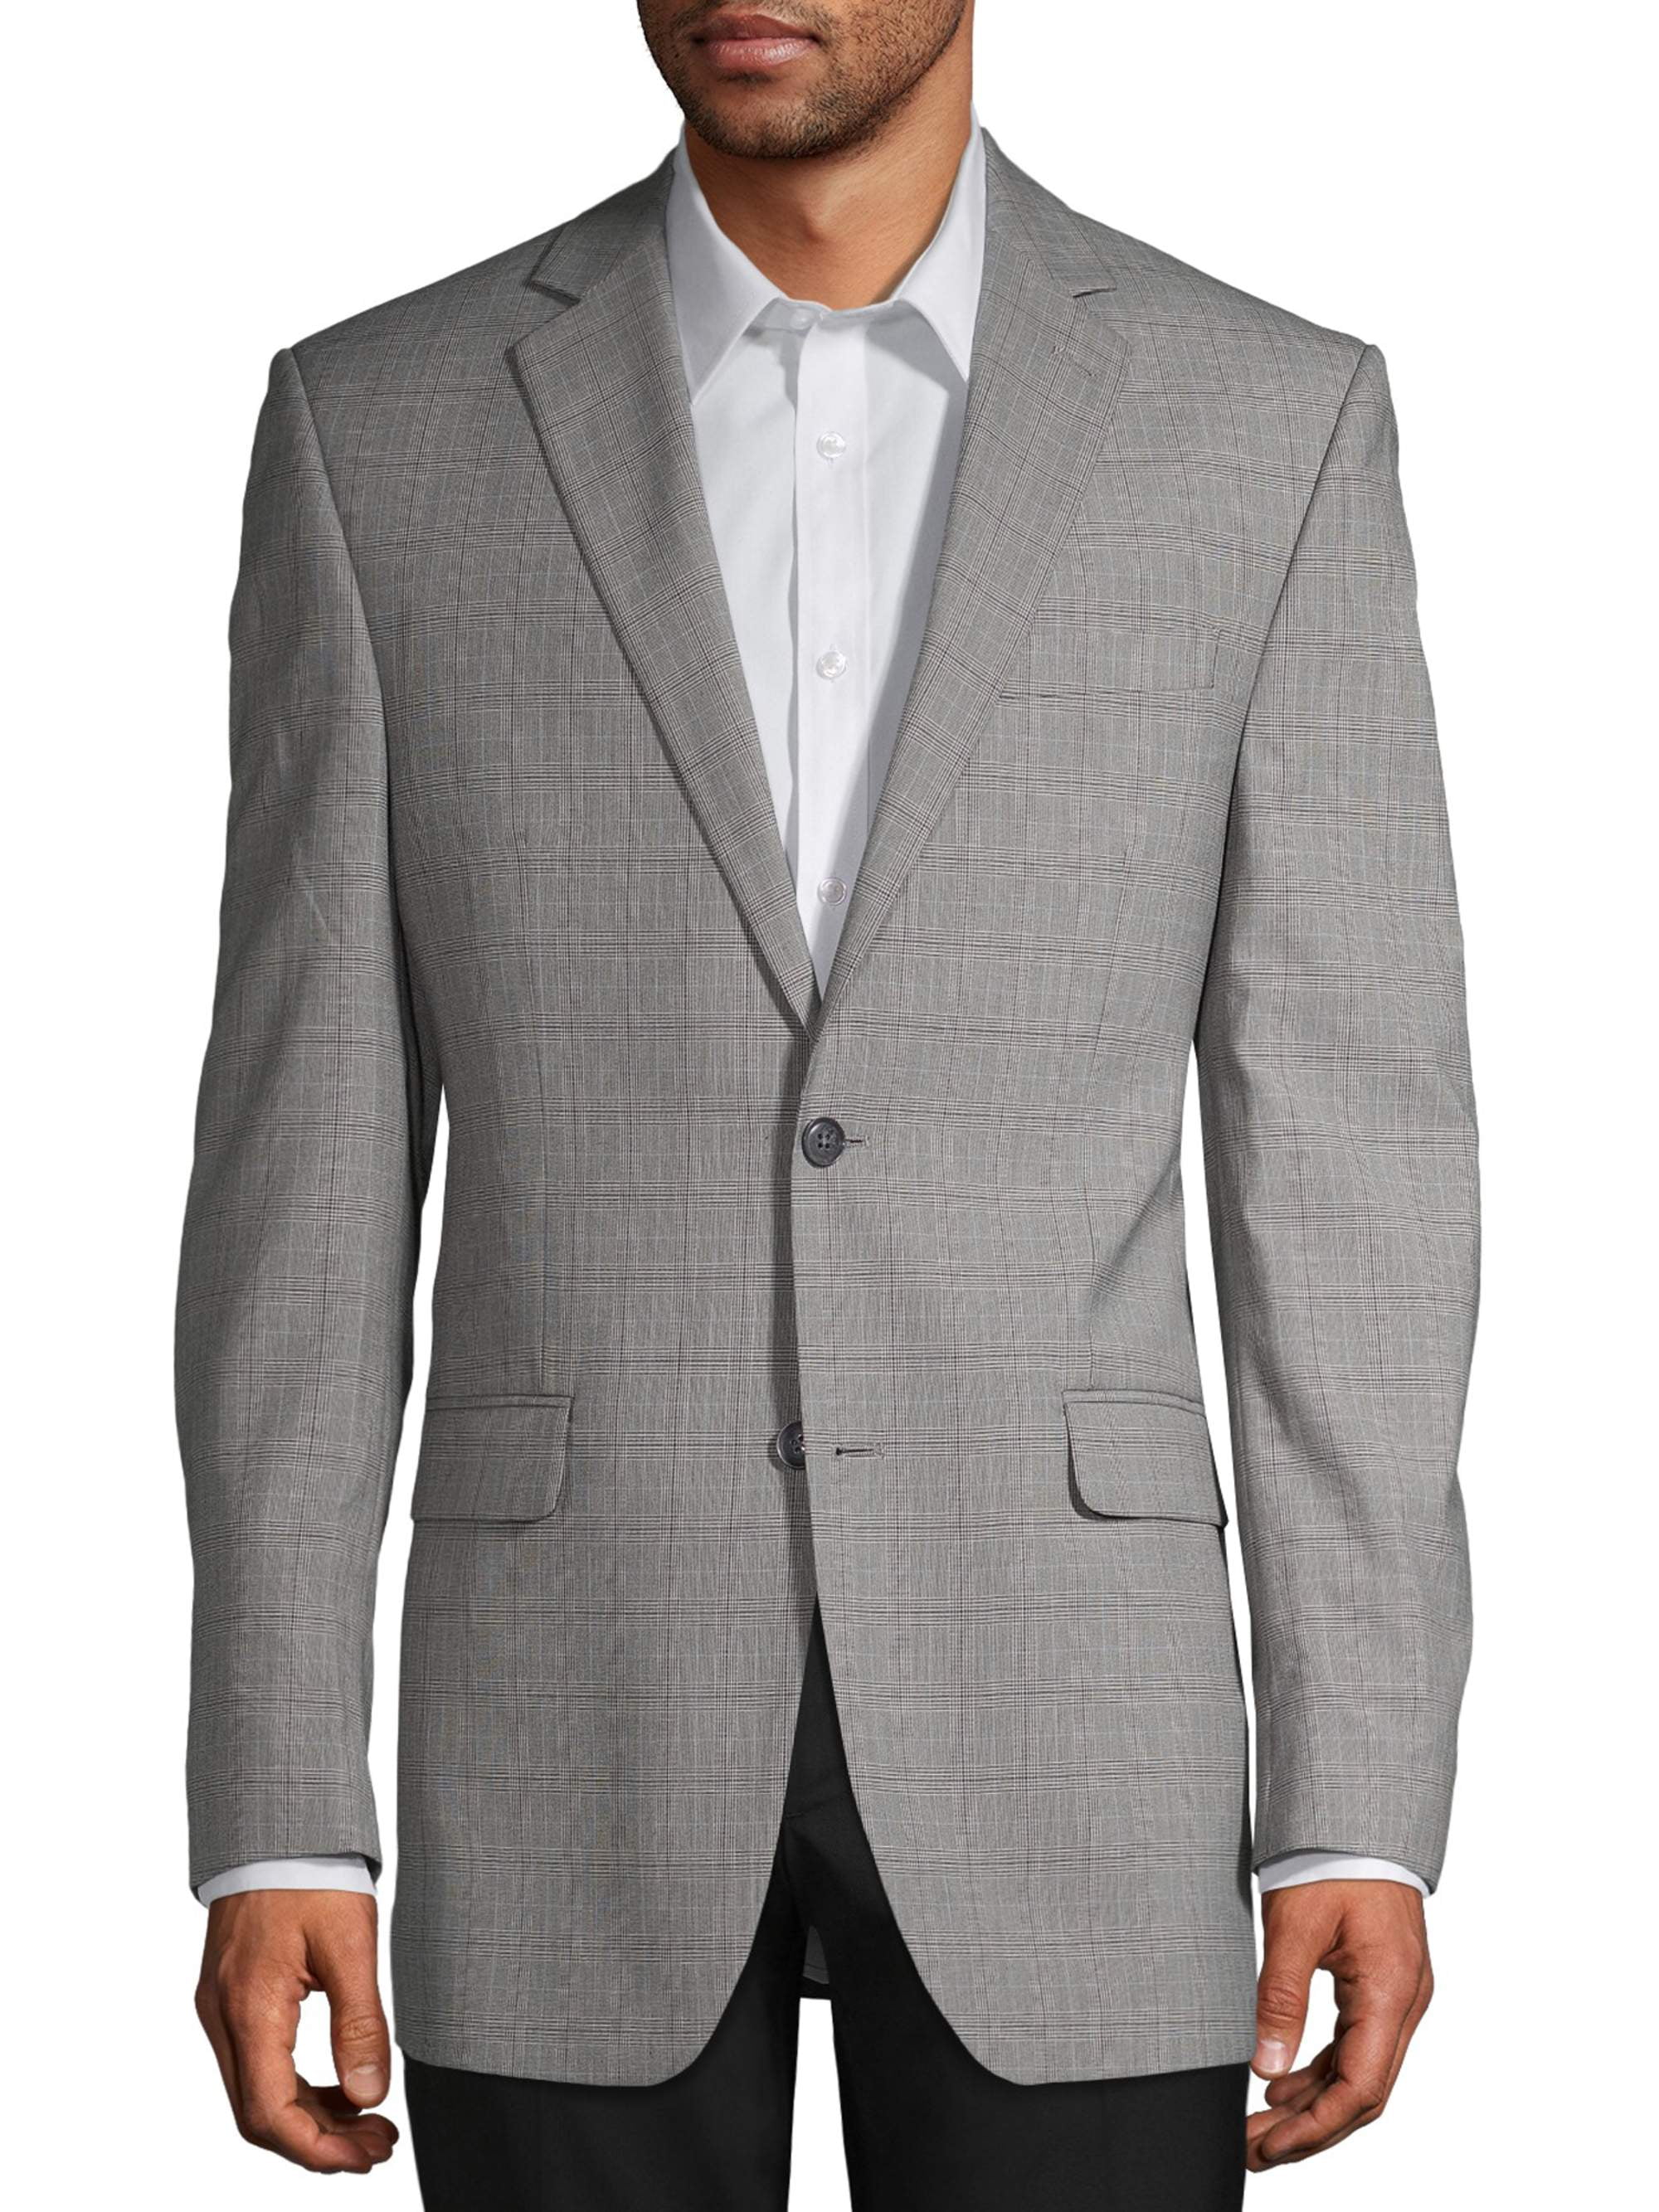 43 R Basic Black Wool Tuxedo Coat Pants Shirt Vest tie Complete Tux Mason Cruise